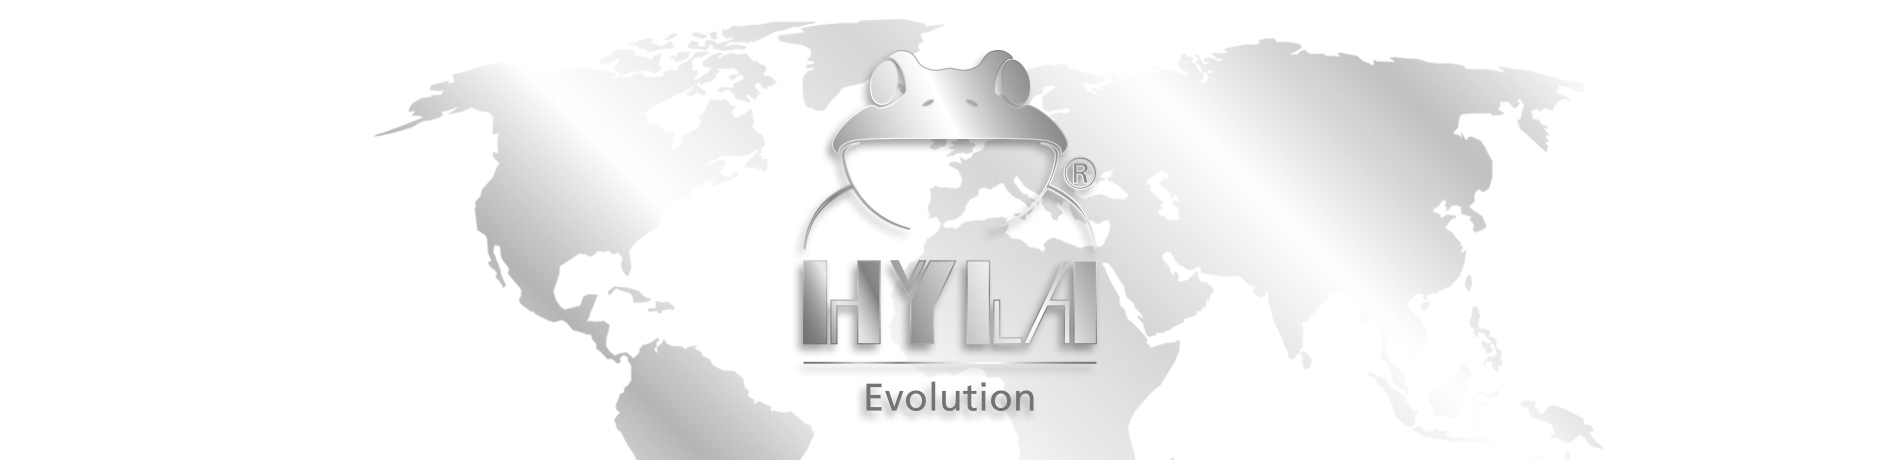 Hyla Evolution